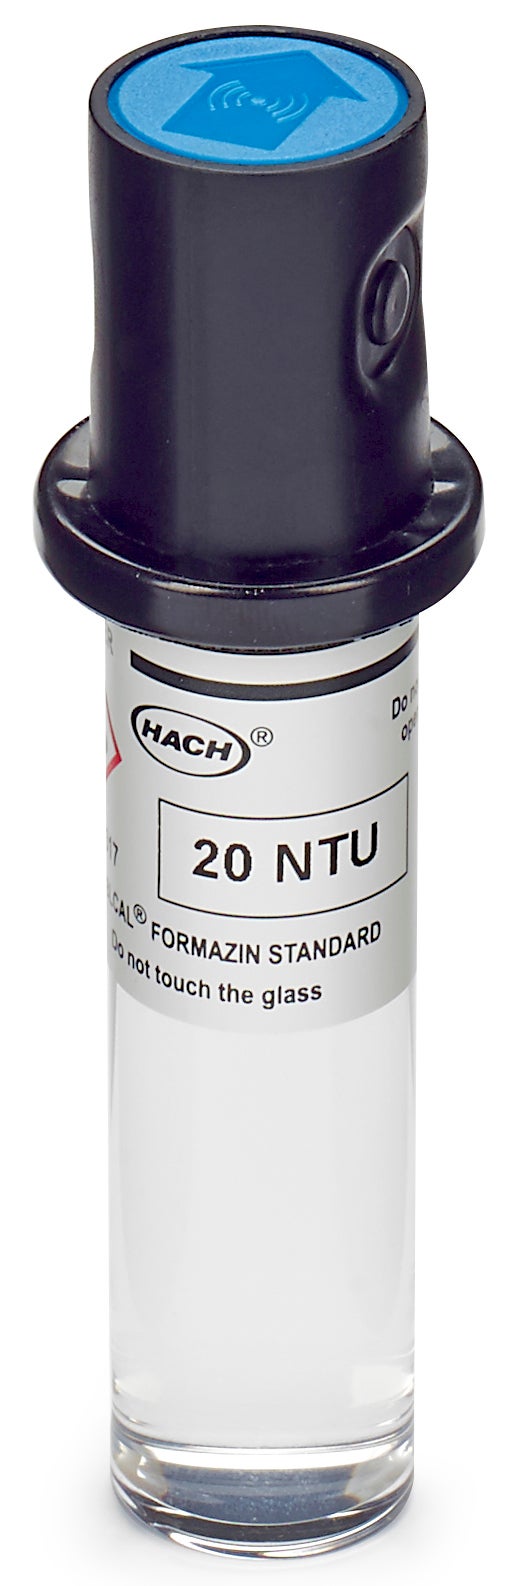 Stablcal Calibration Vial, 20 NTU, with RFID for TU5200, TU5300sc, and TU5400sc Laser Turbidimeters